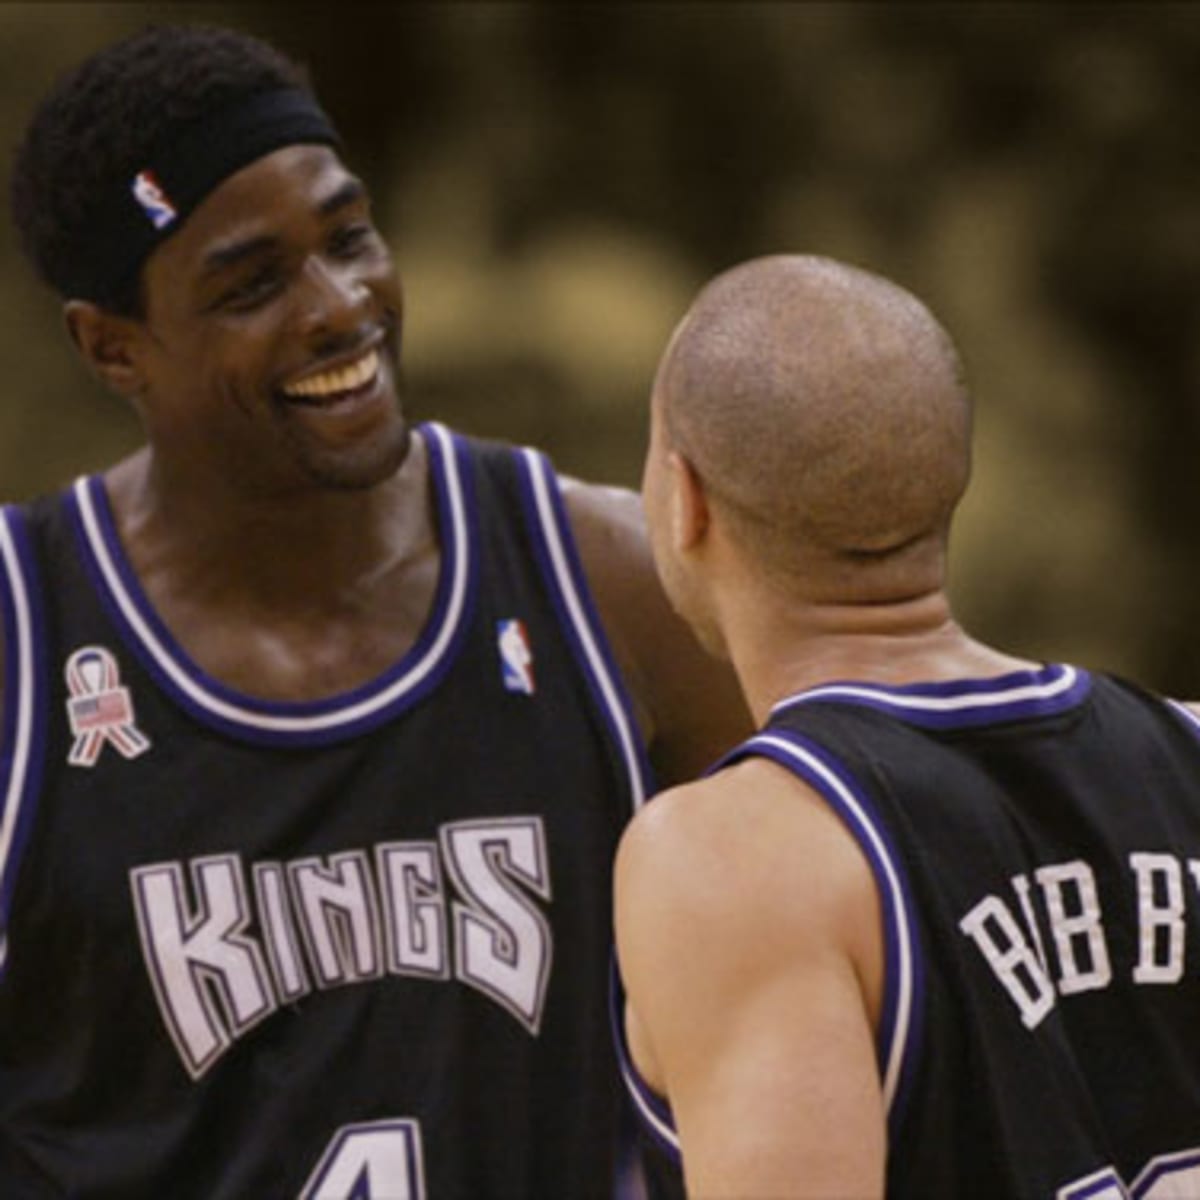 Favorite Mike Bibby memory? - Sacramento Kings